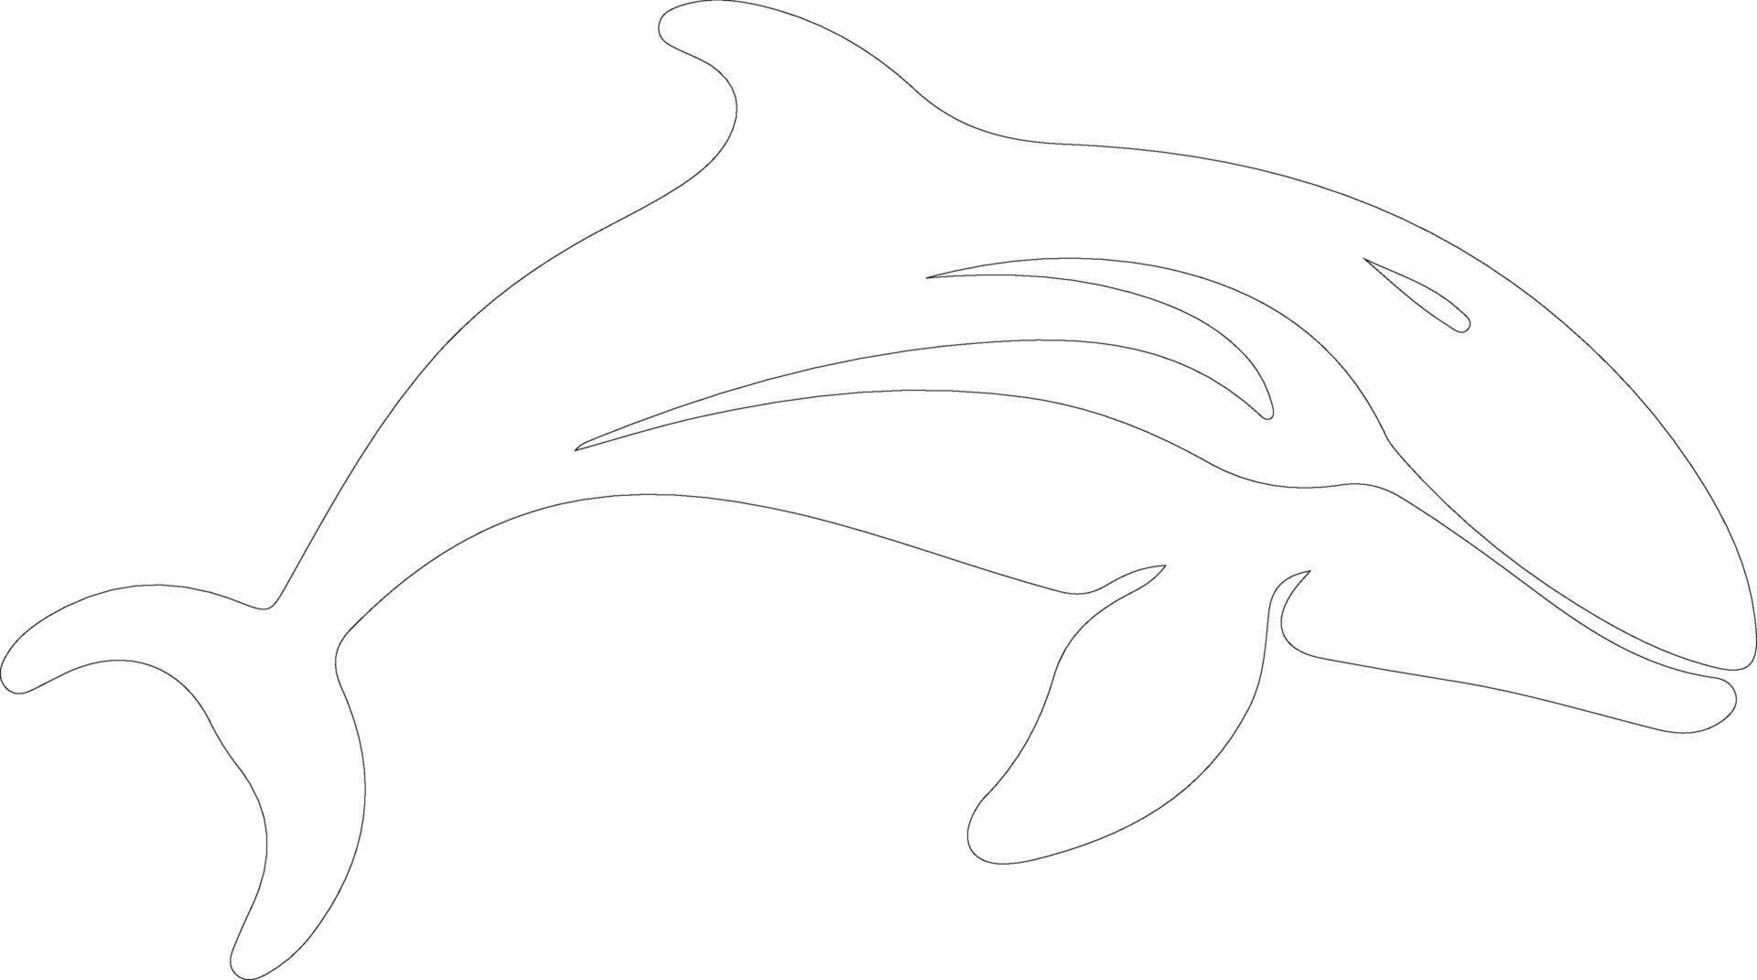 béluga baleine contour silhouette vecteur